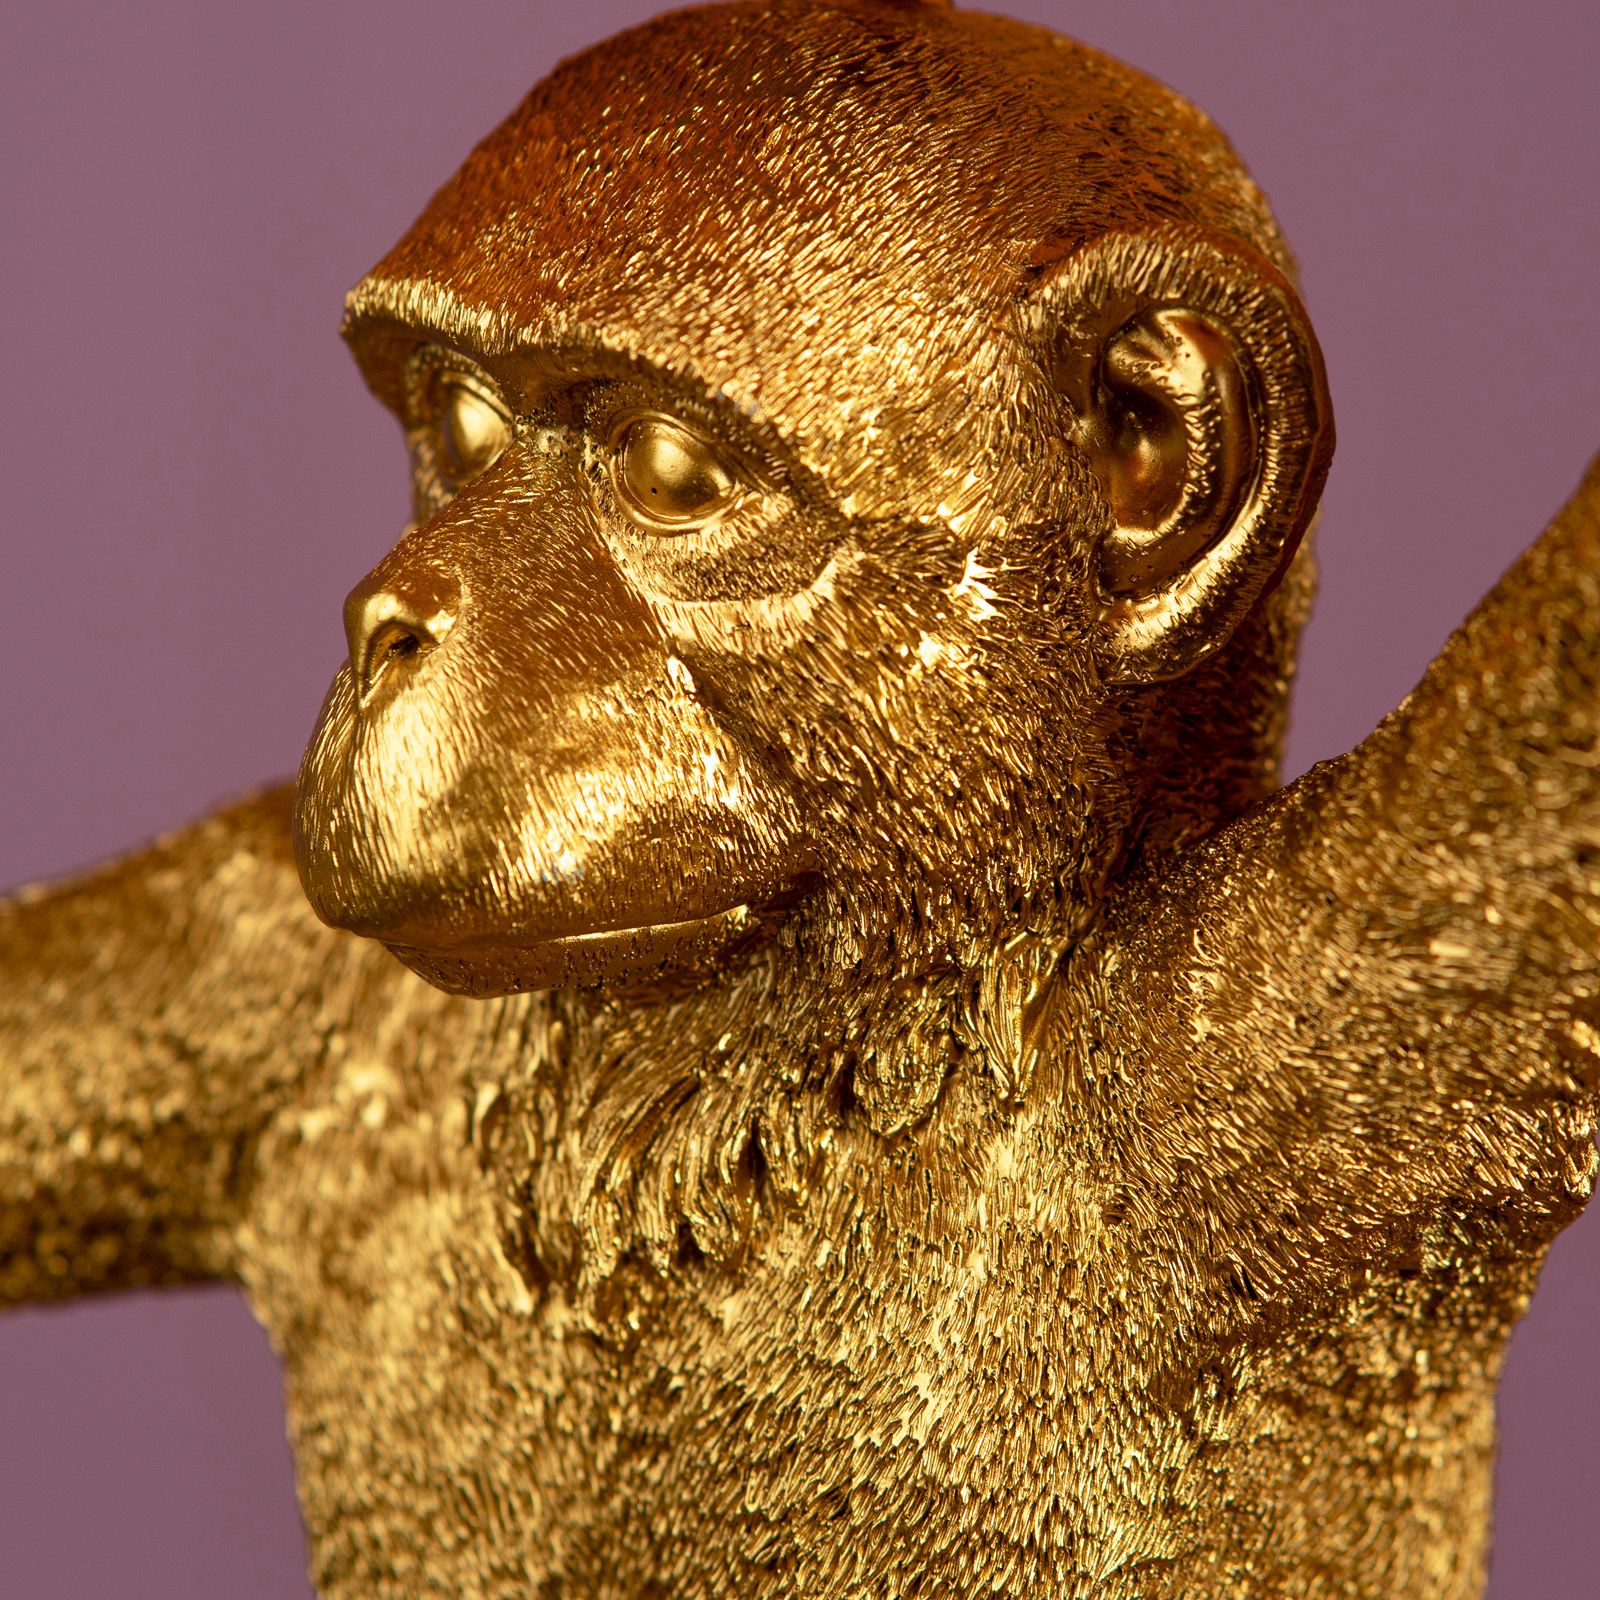 Tischleuchte Affe Chimpy, gold/petrol